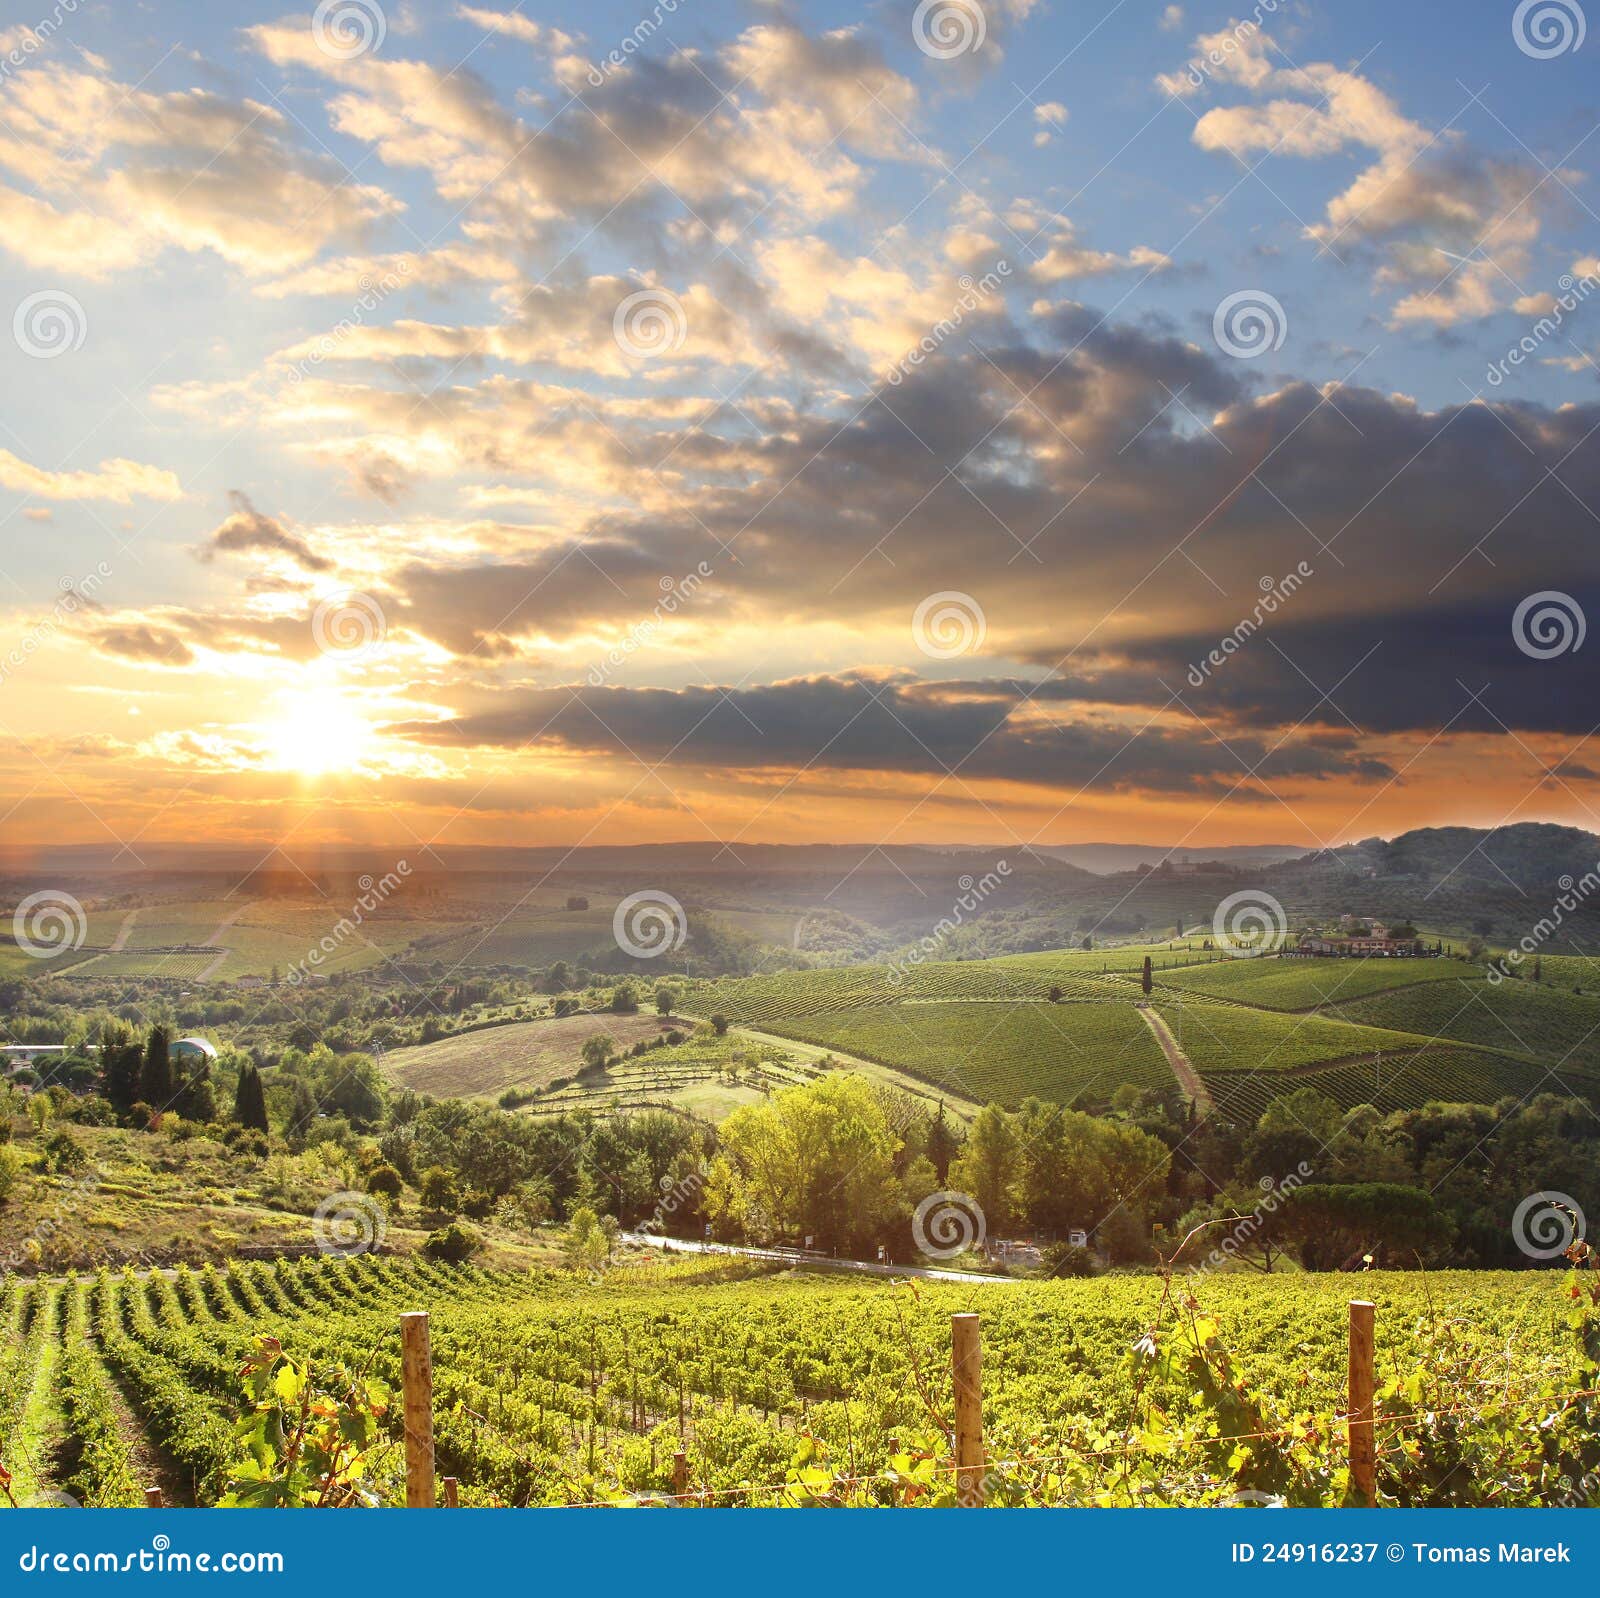 vineyard in chianti, tuscany